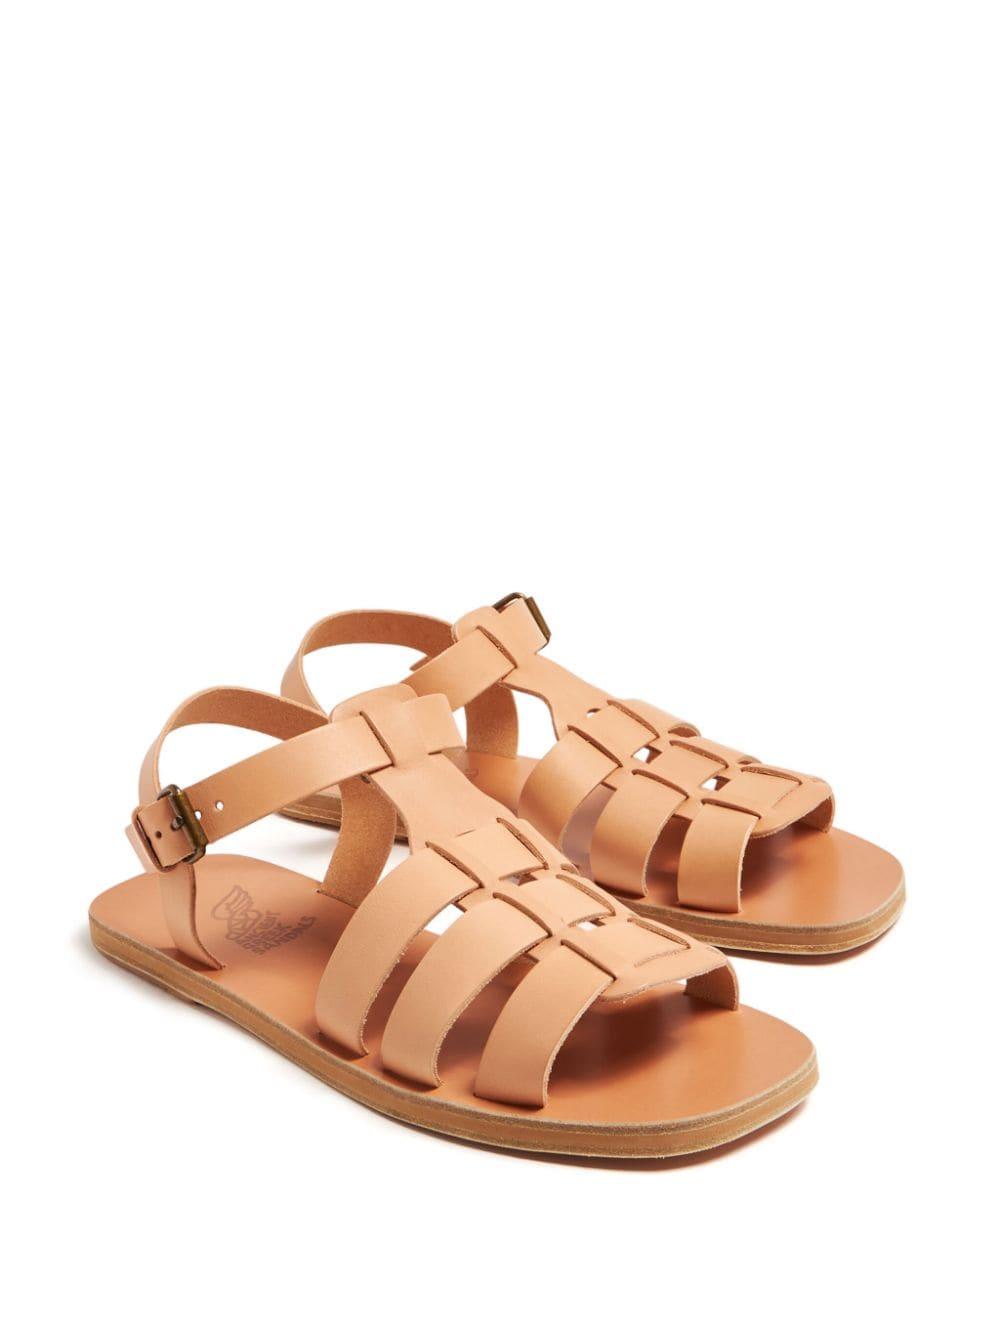 Buy Leather Handmade Greek Sandals for Kids Metallic Pink, Slink Back  Sandals for Baby Girl , Gift or Kids Online in India - Etsy